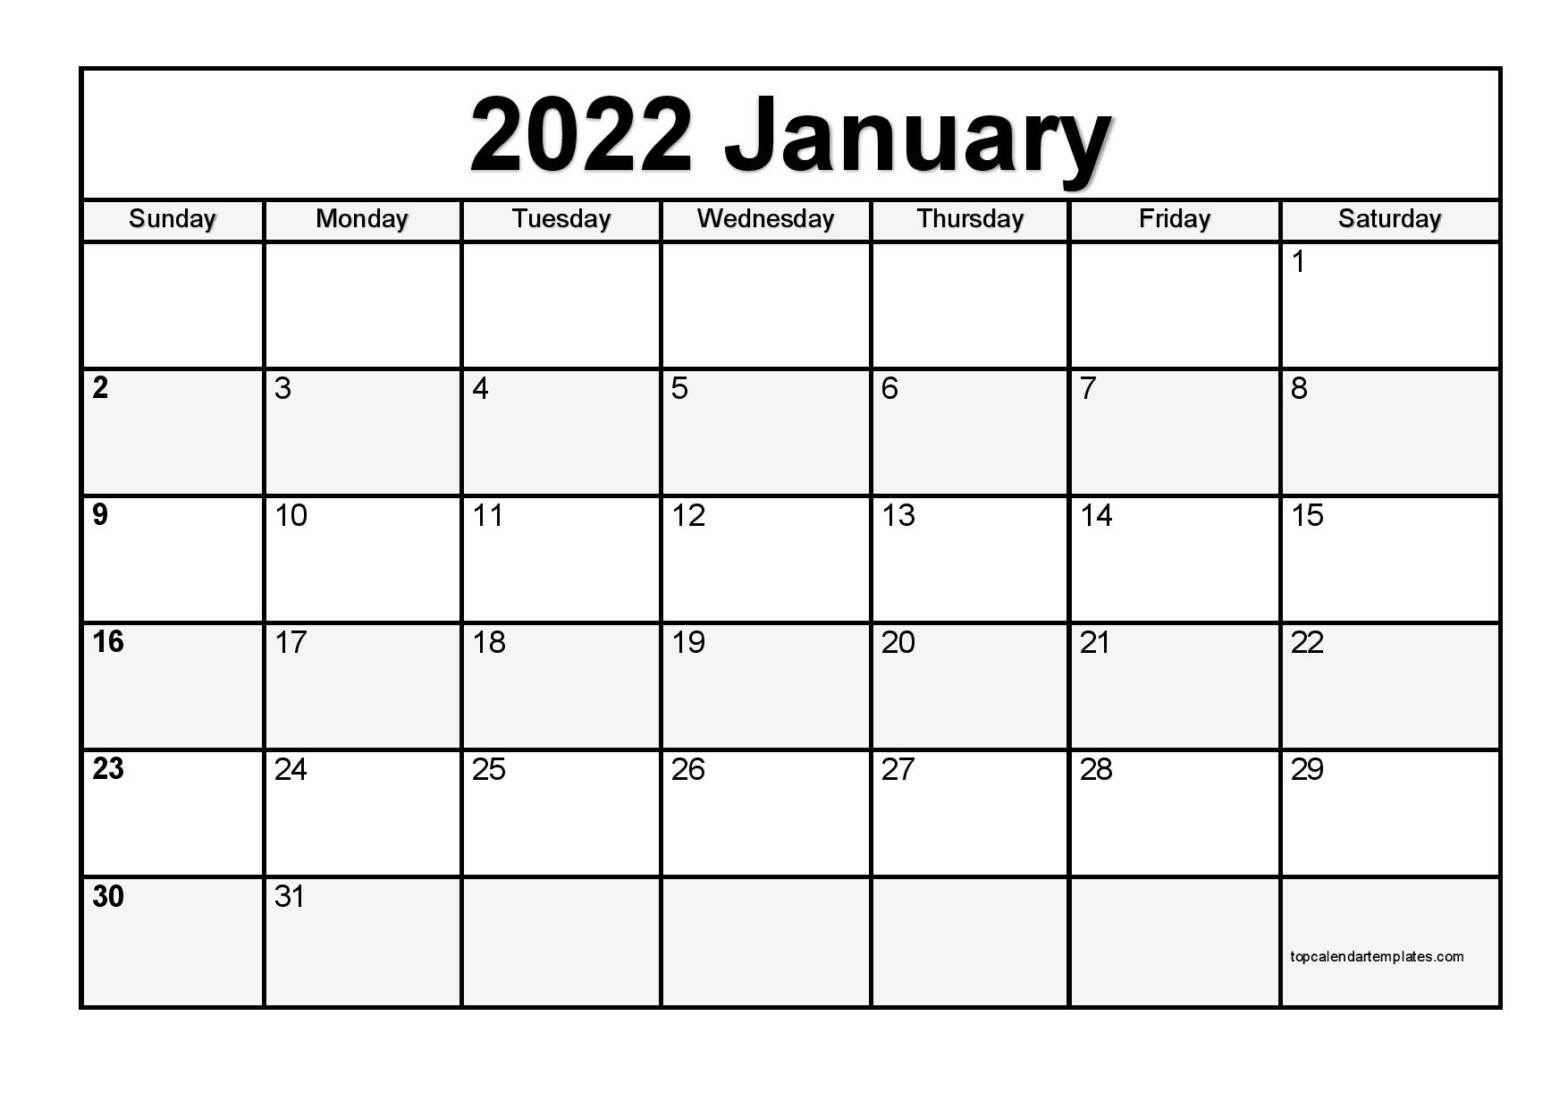 January 2022 Calendar Free Printable - 2022 Calendars